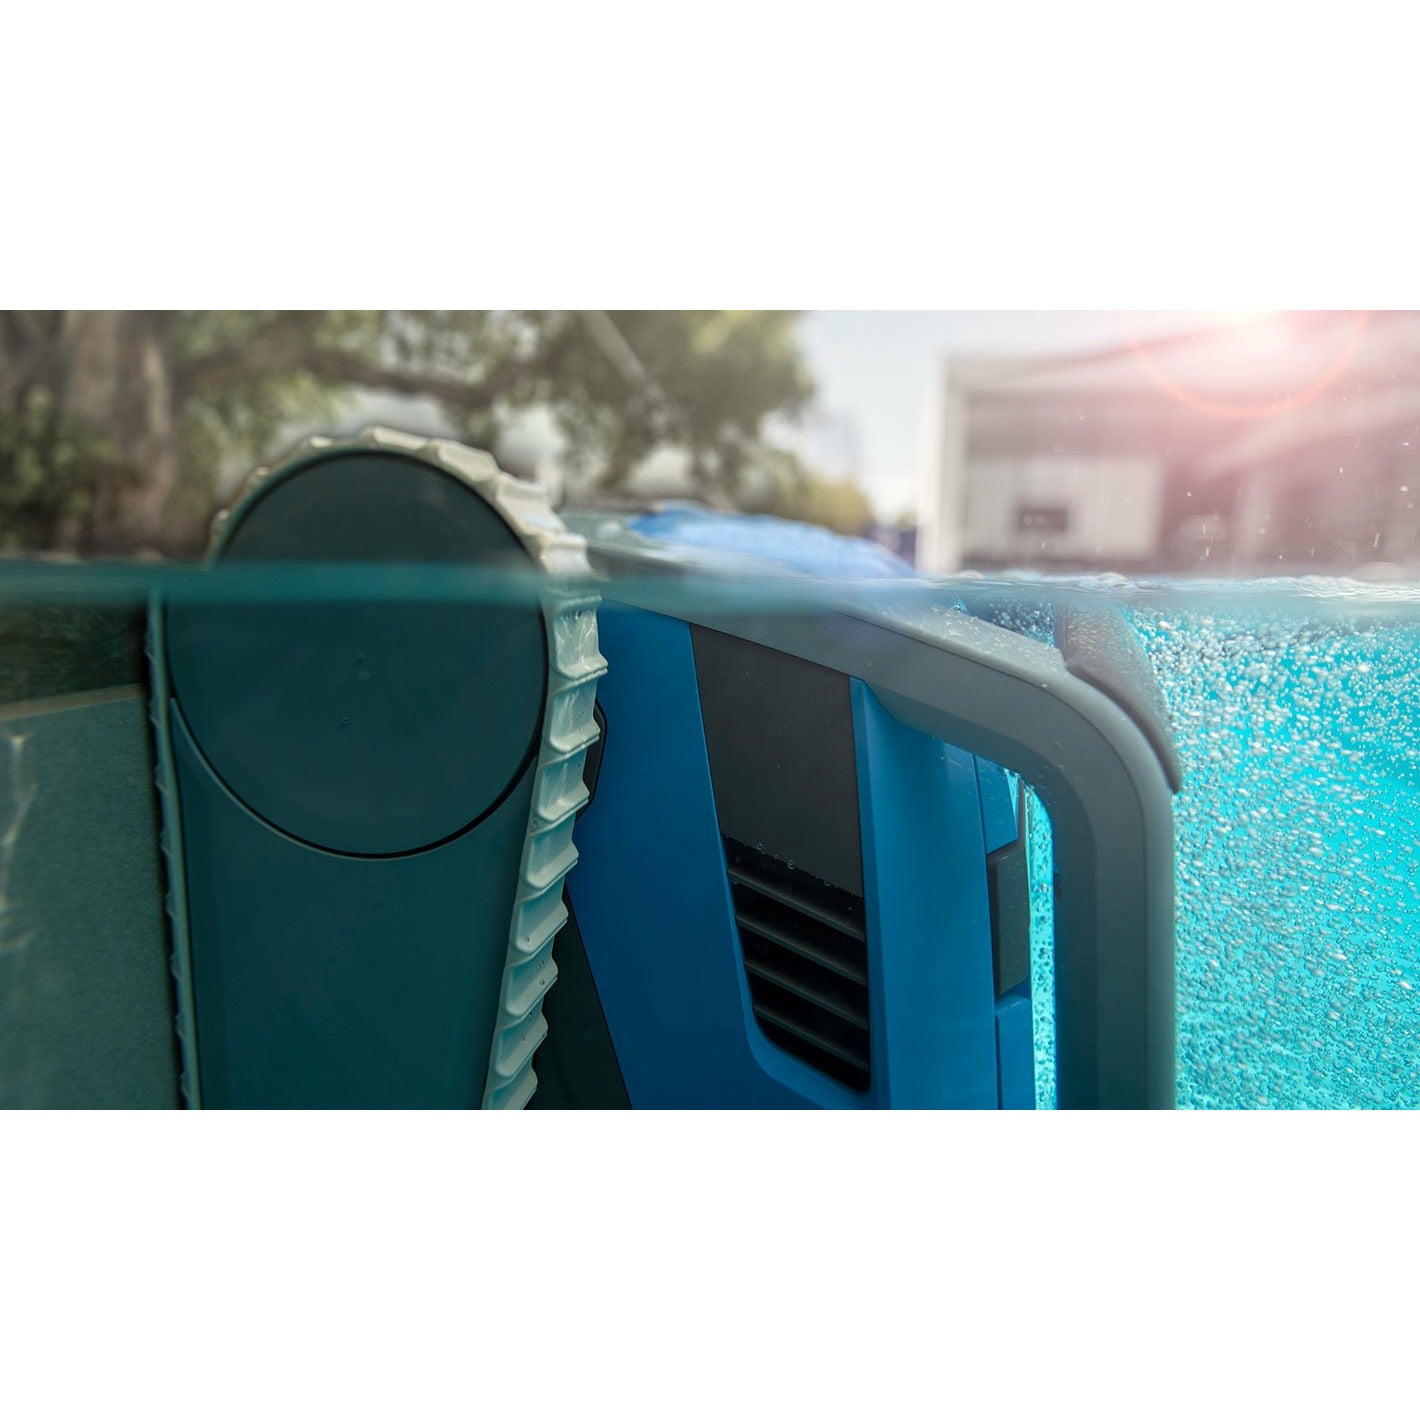 Enhanced Warranty Maytronics Dolphin M600 Robotic Pool Cleaner